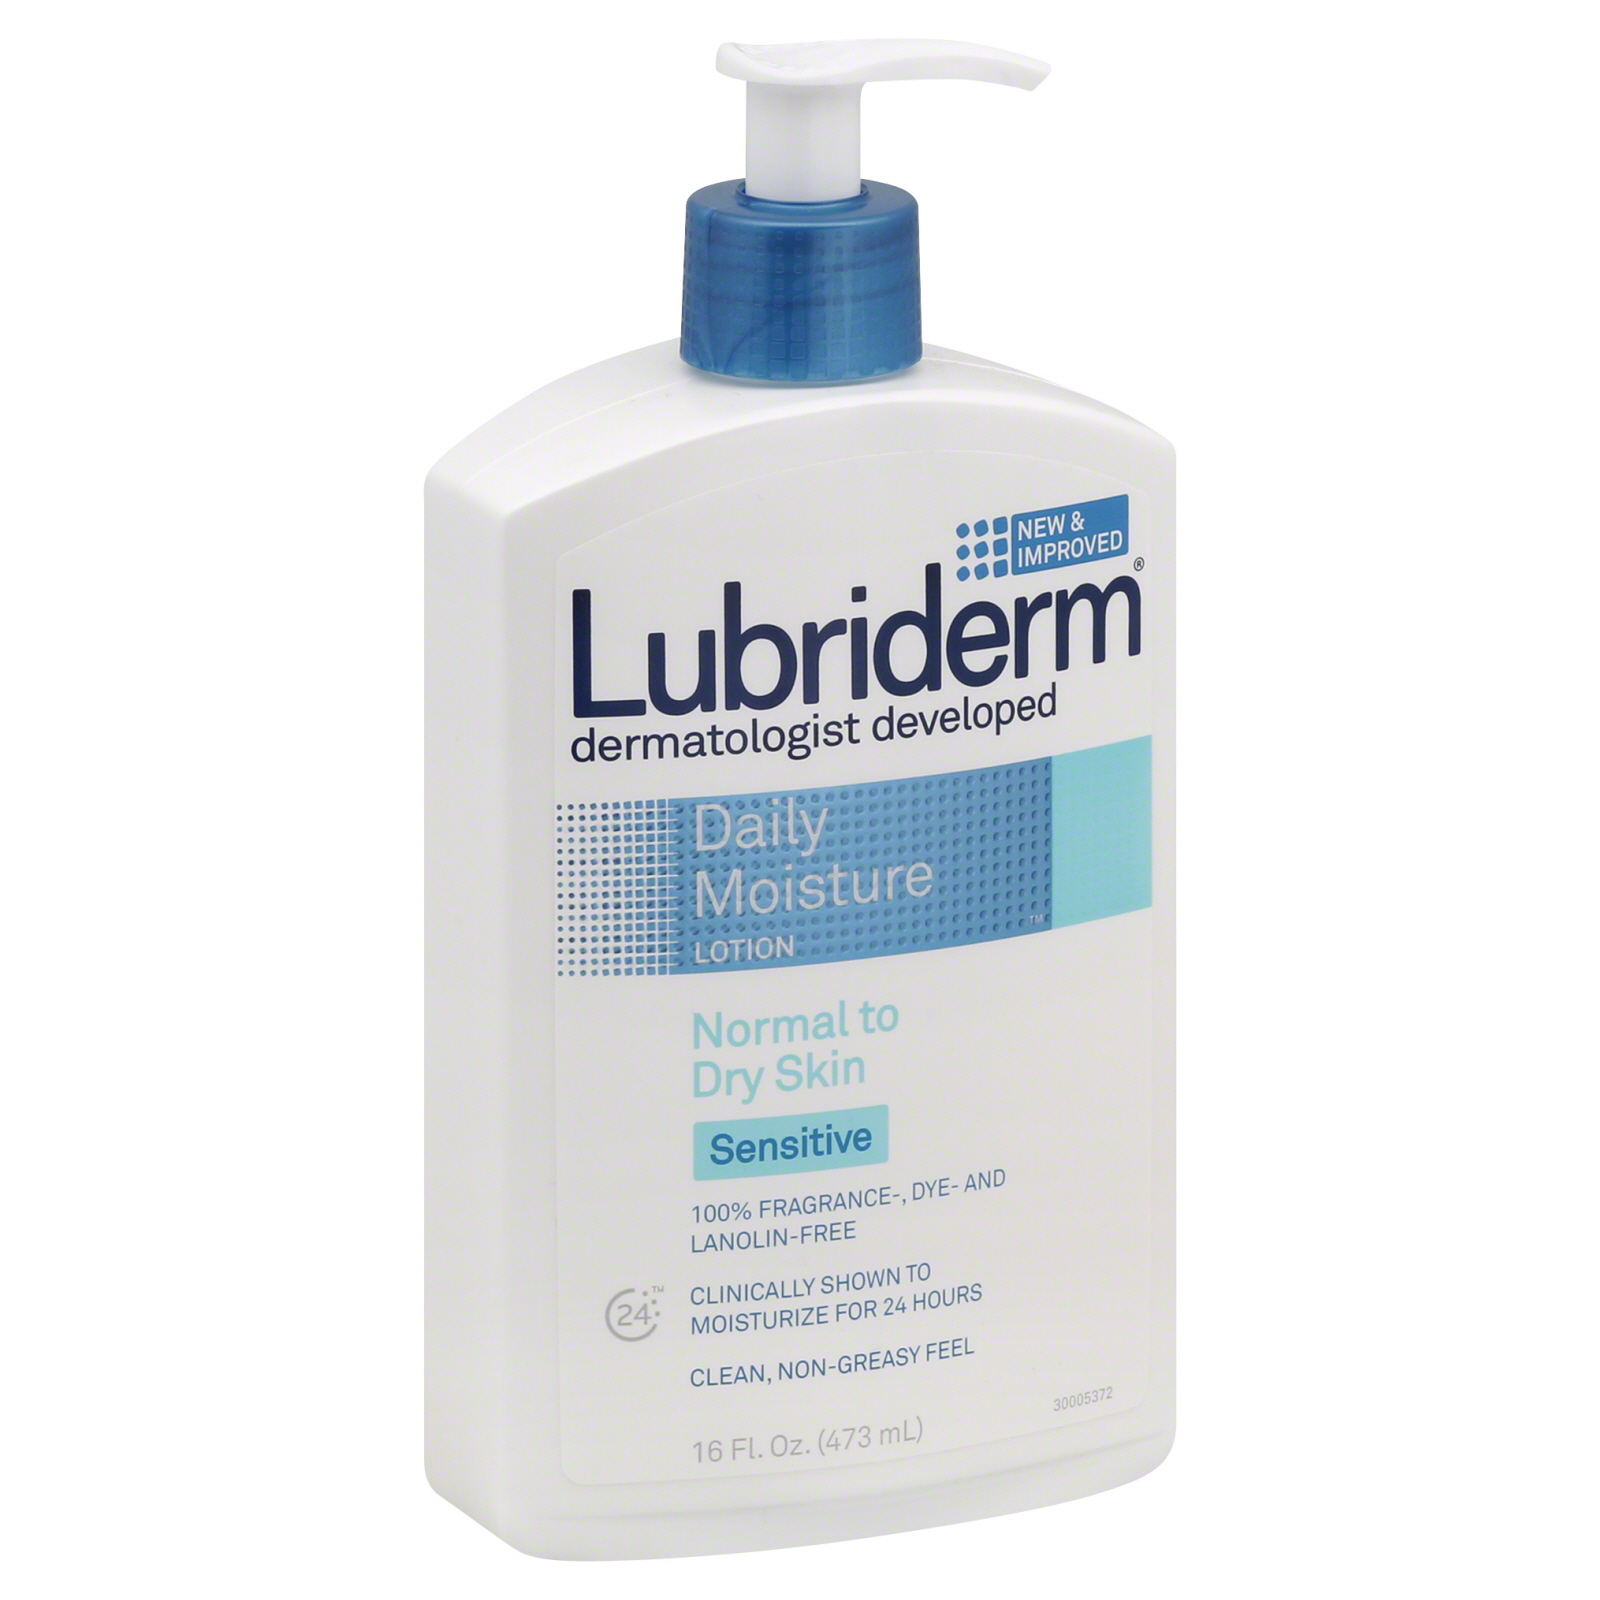 Lubriderm Lotion, Daily Moisture, Normal to Dry Skin, Sensitive, 16 fl oz (473 ml)